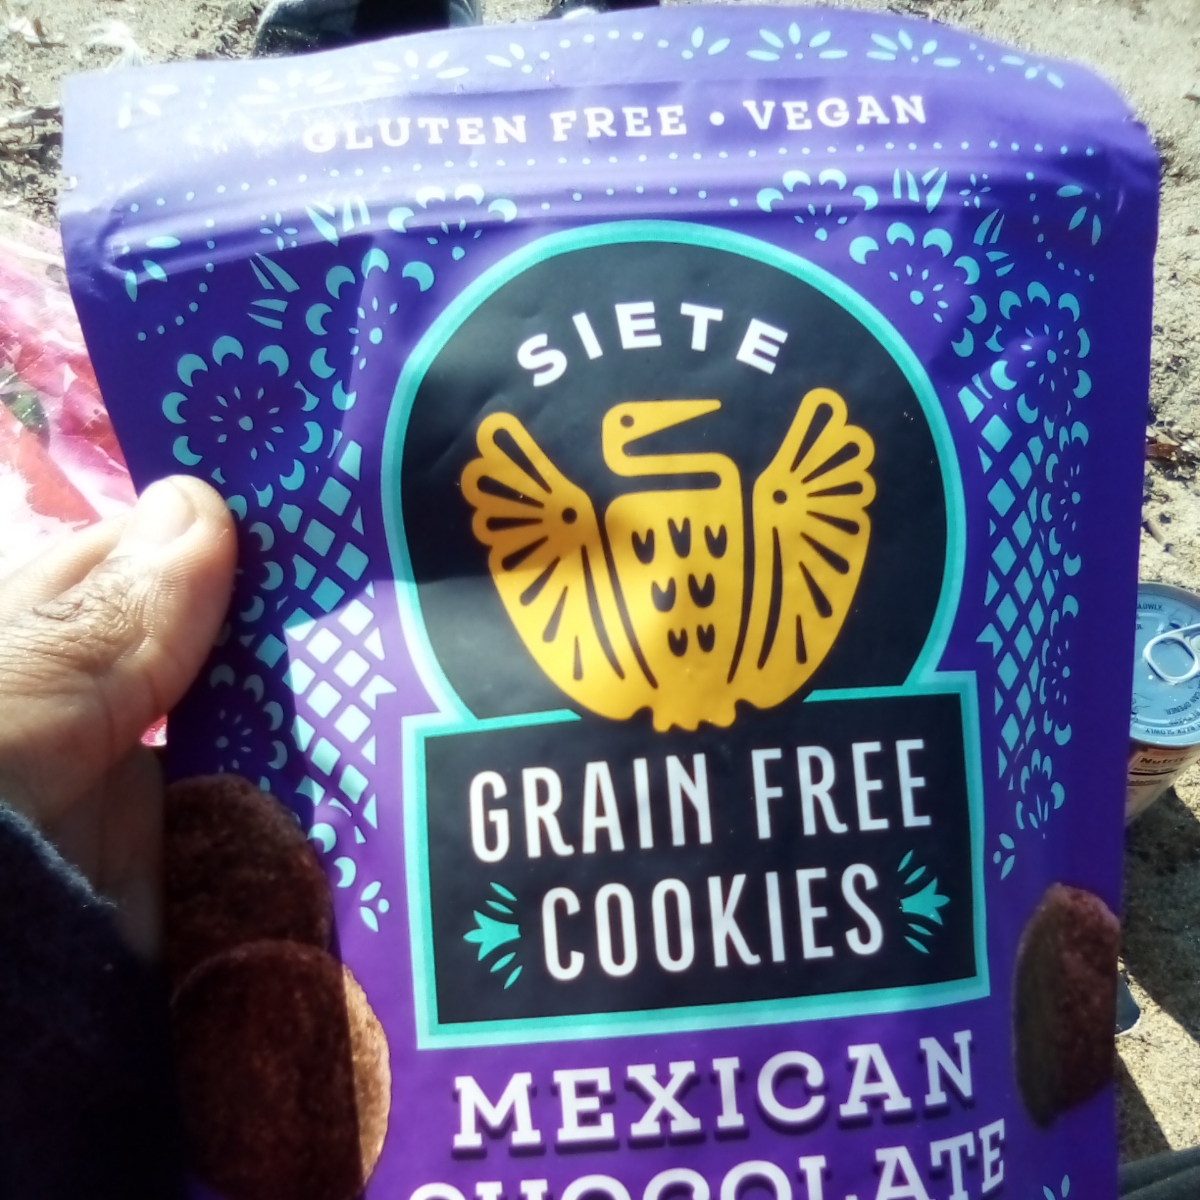 Siete Grain Free Mexican Chocolate Cookies, 4.5 oz